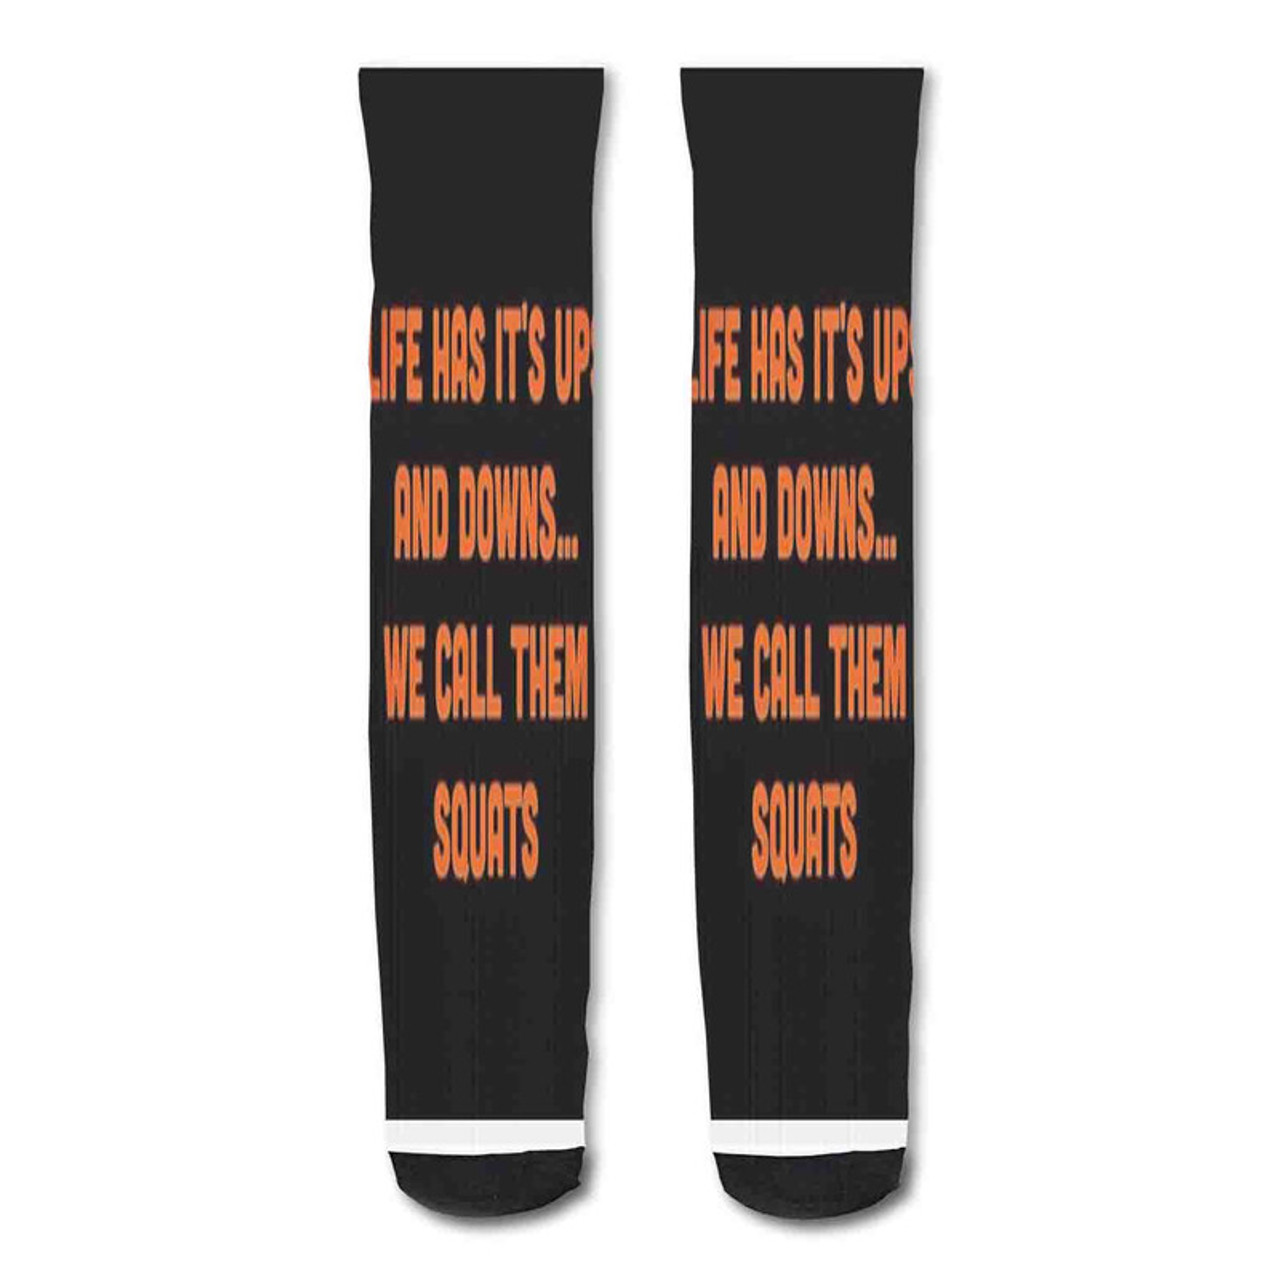 Printed gymnastics socks